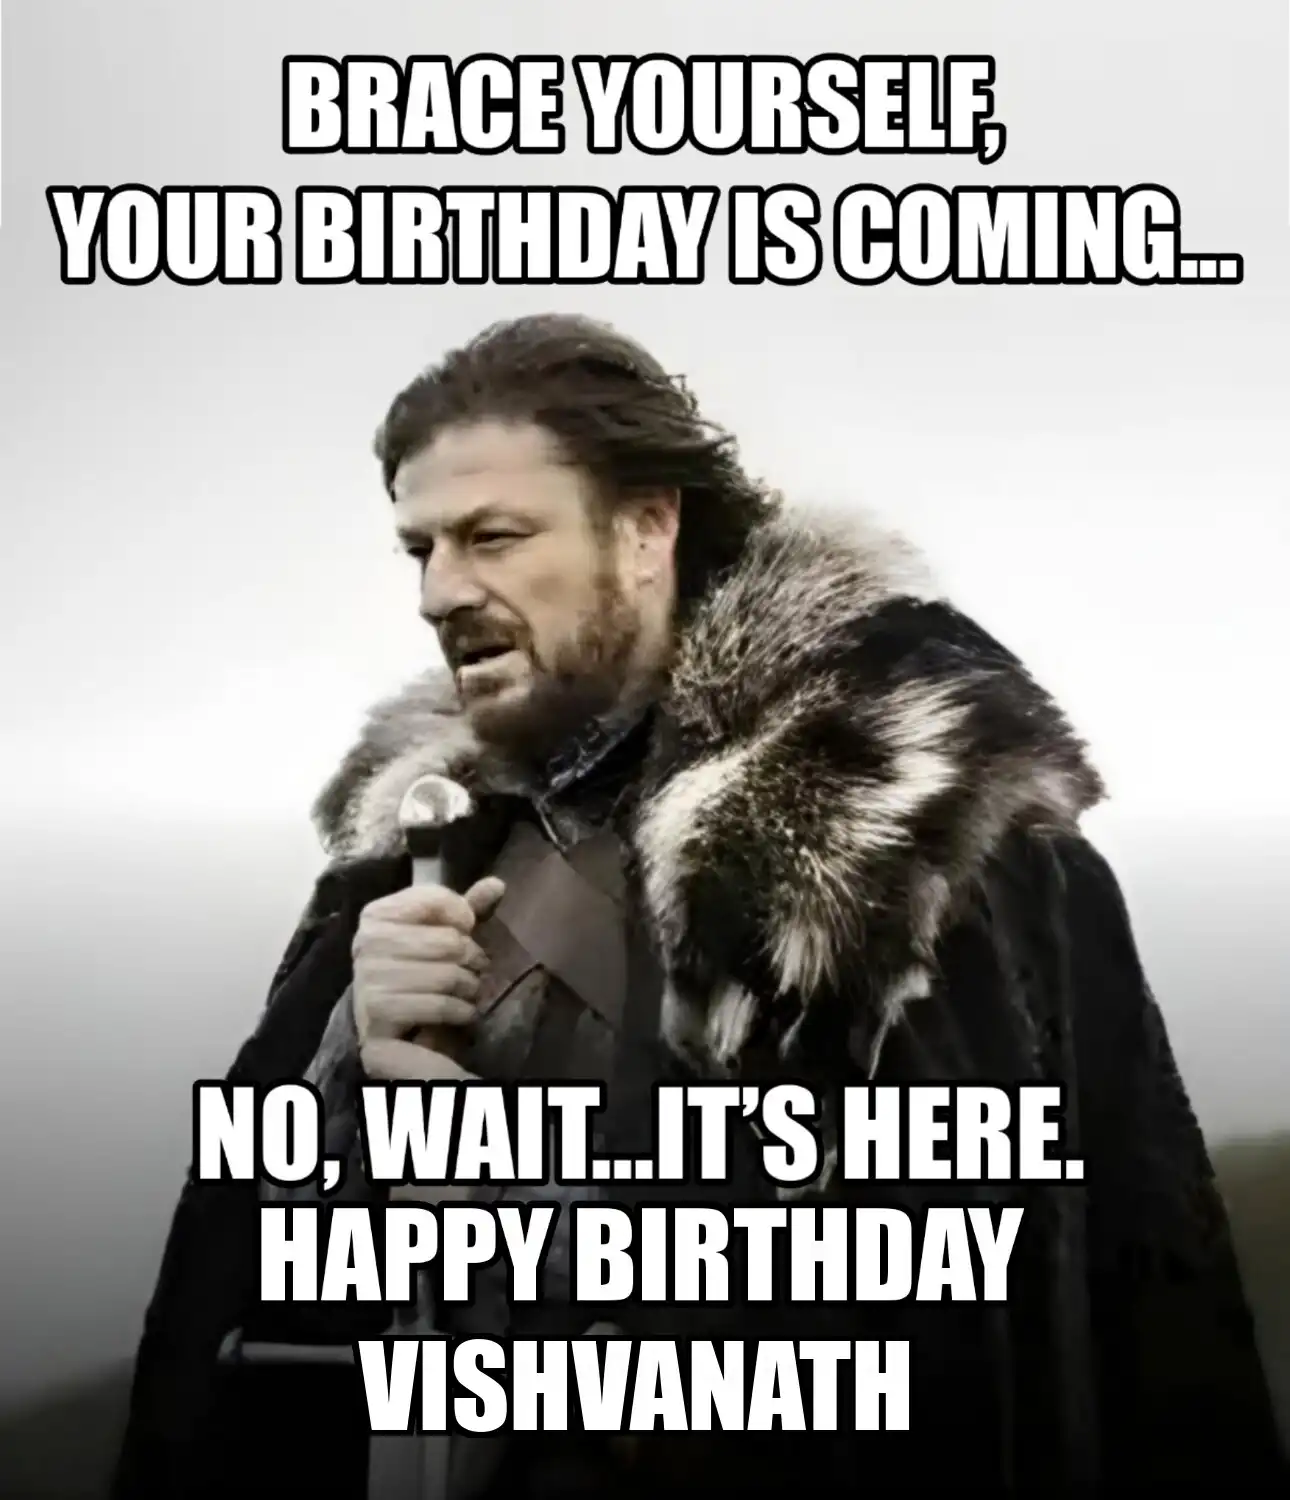 Happy Birthday Vishvanath Brace Yourself Your Birthday Is Coming Meme